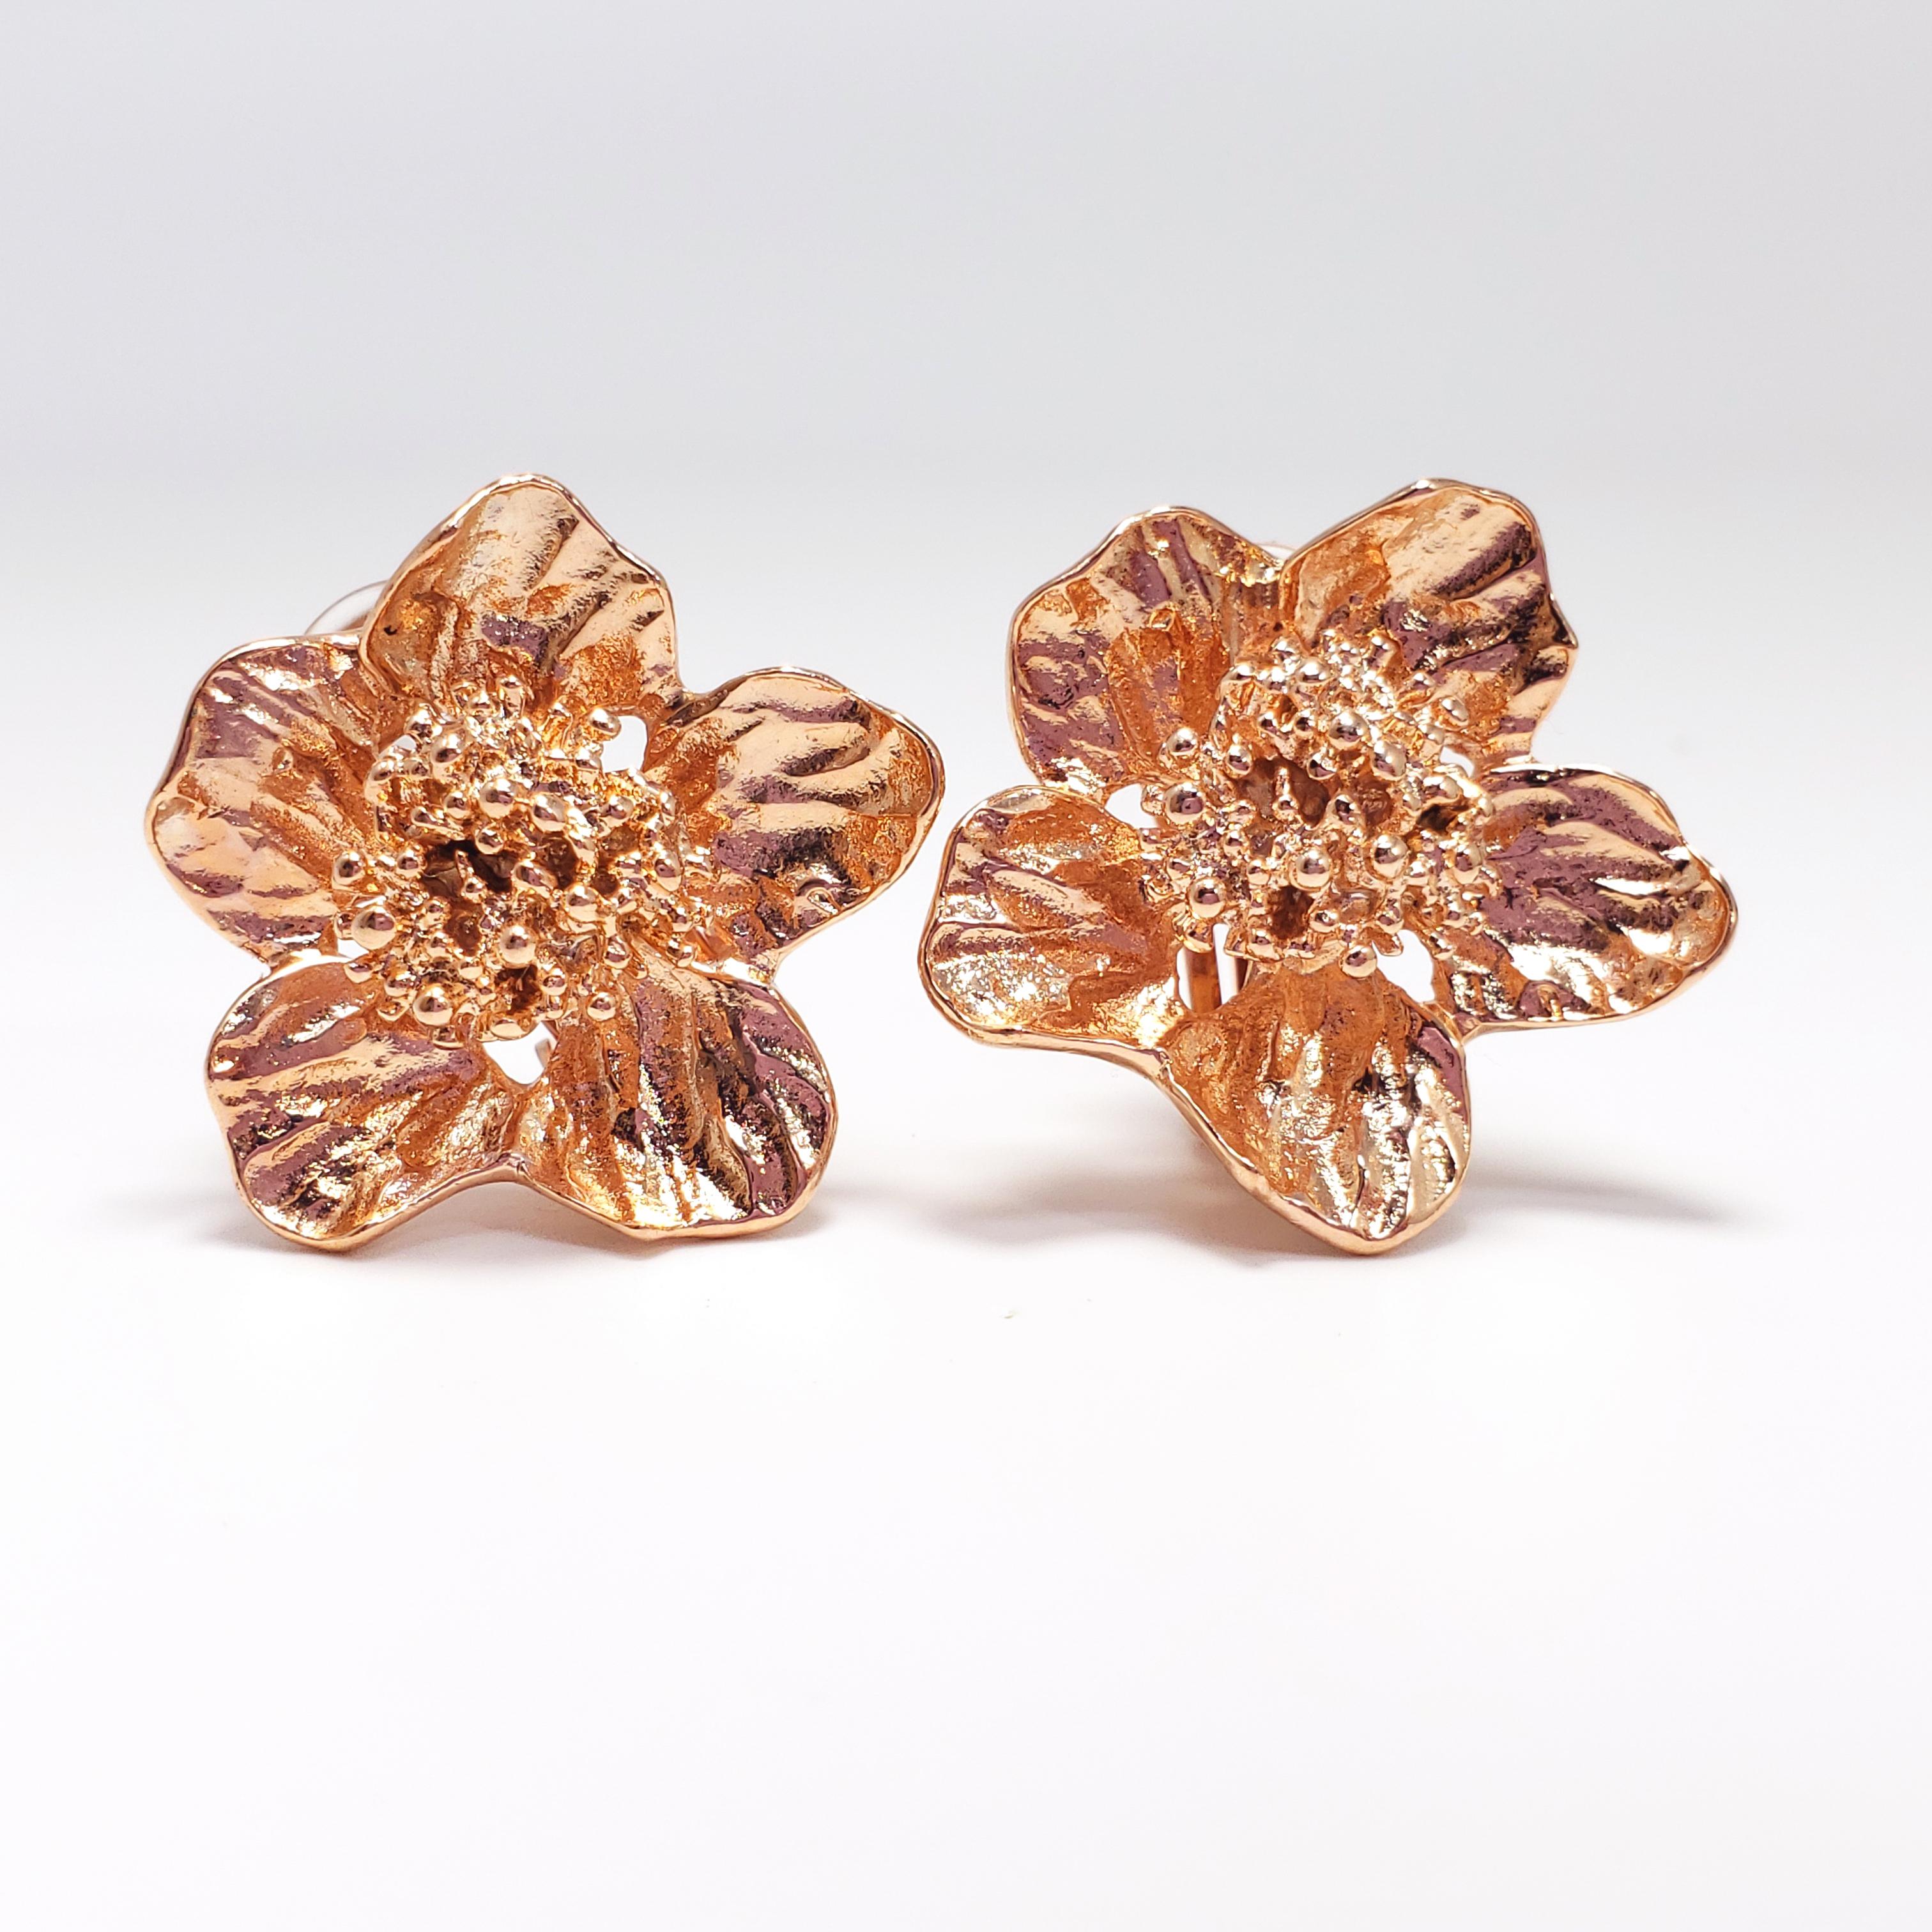 Oscar de la Renta rose gold bold flower button clip on earrings. Textured rose-gold plated metal. Simple and stylish!

Hallmarks: Oscar de la Renta, Made in USA